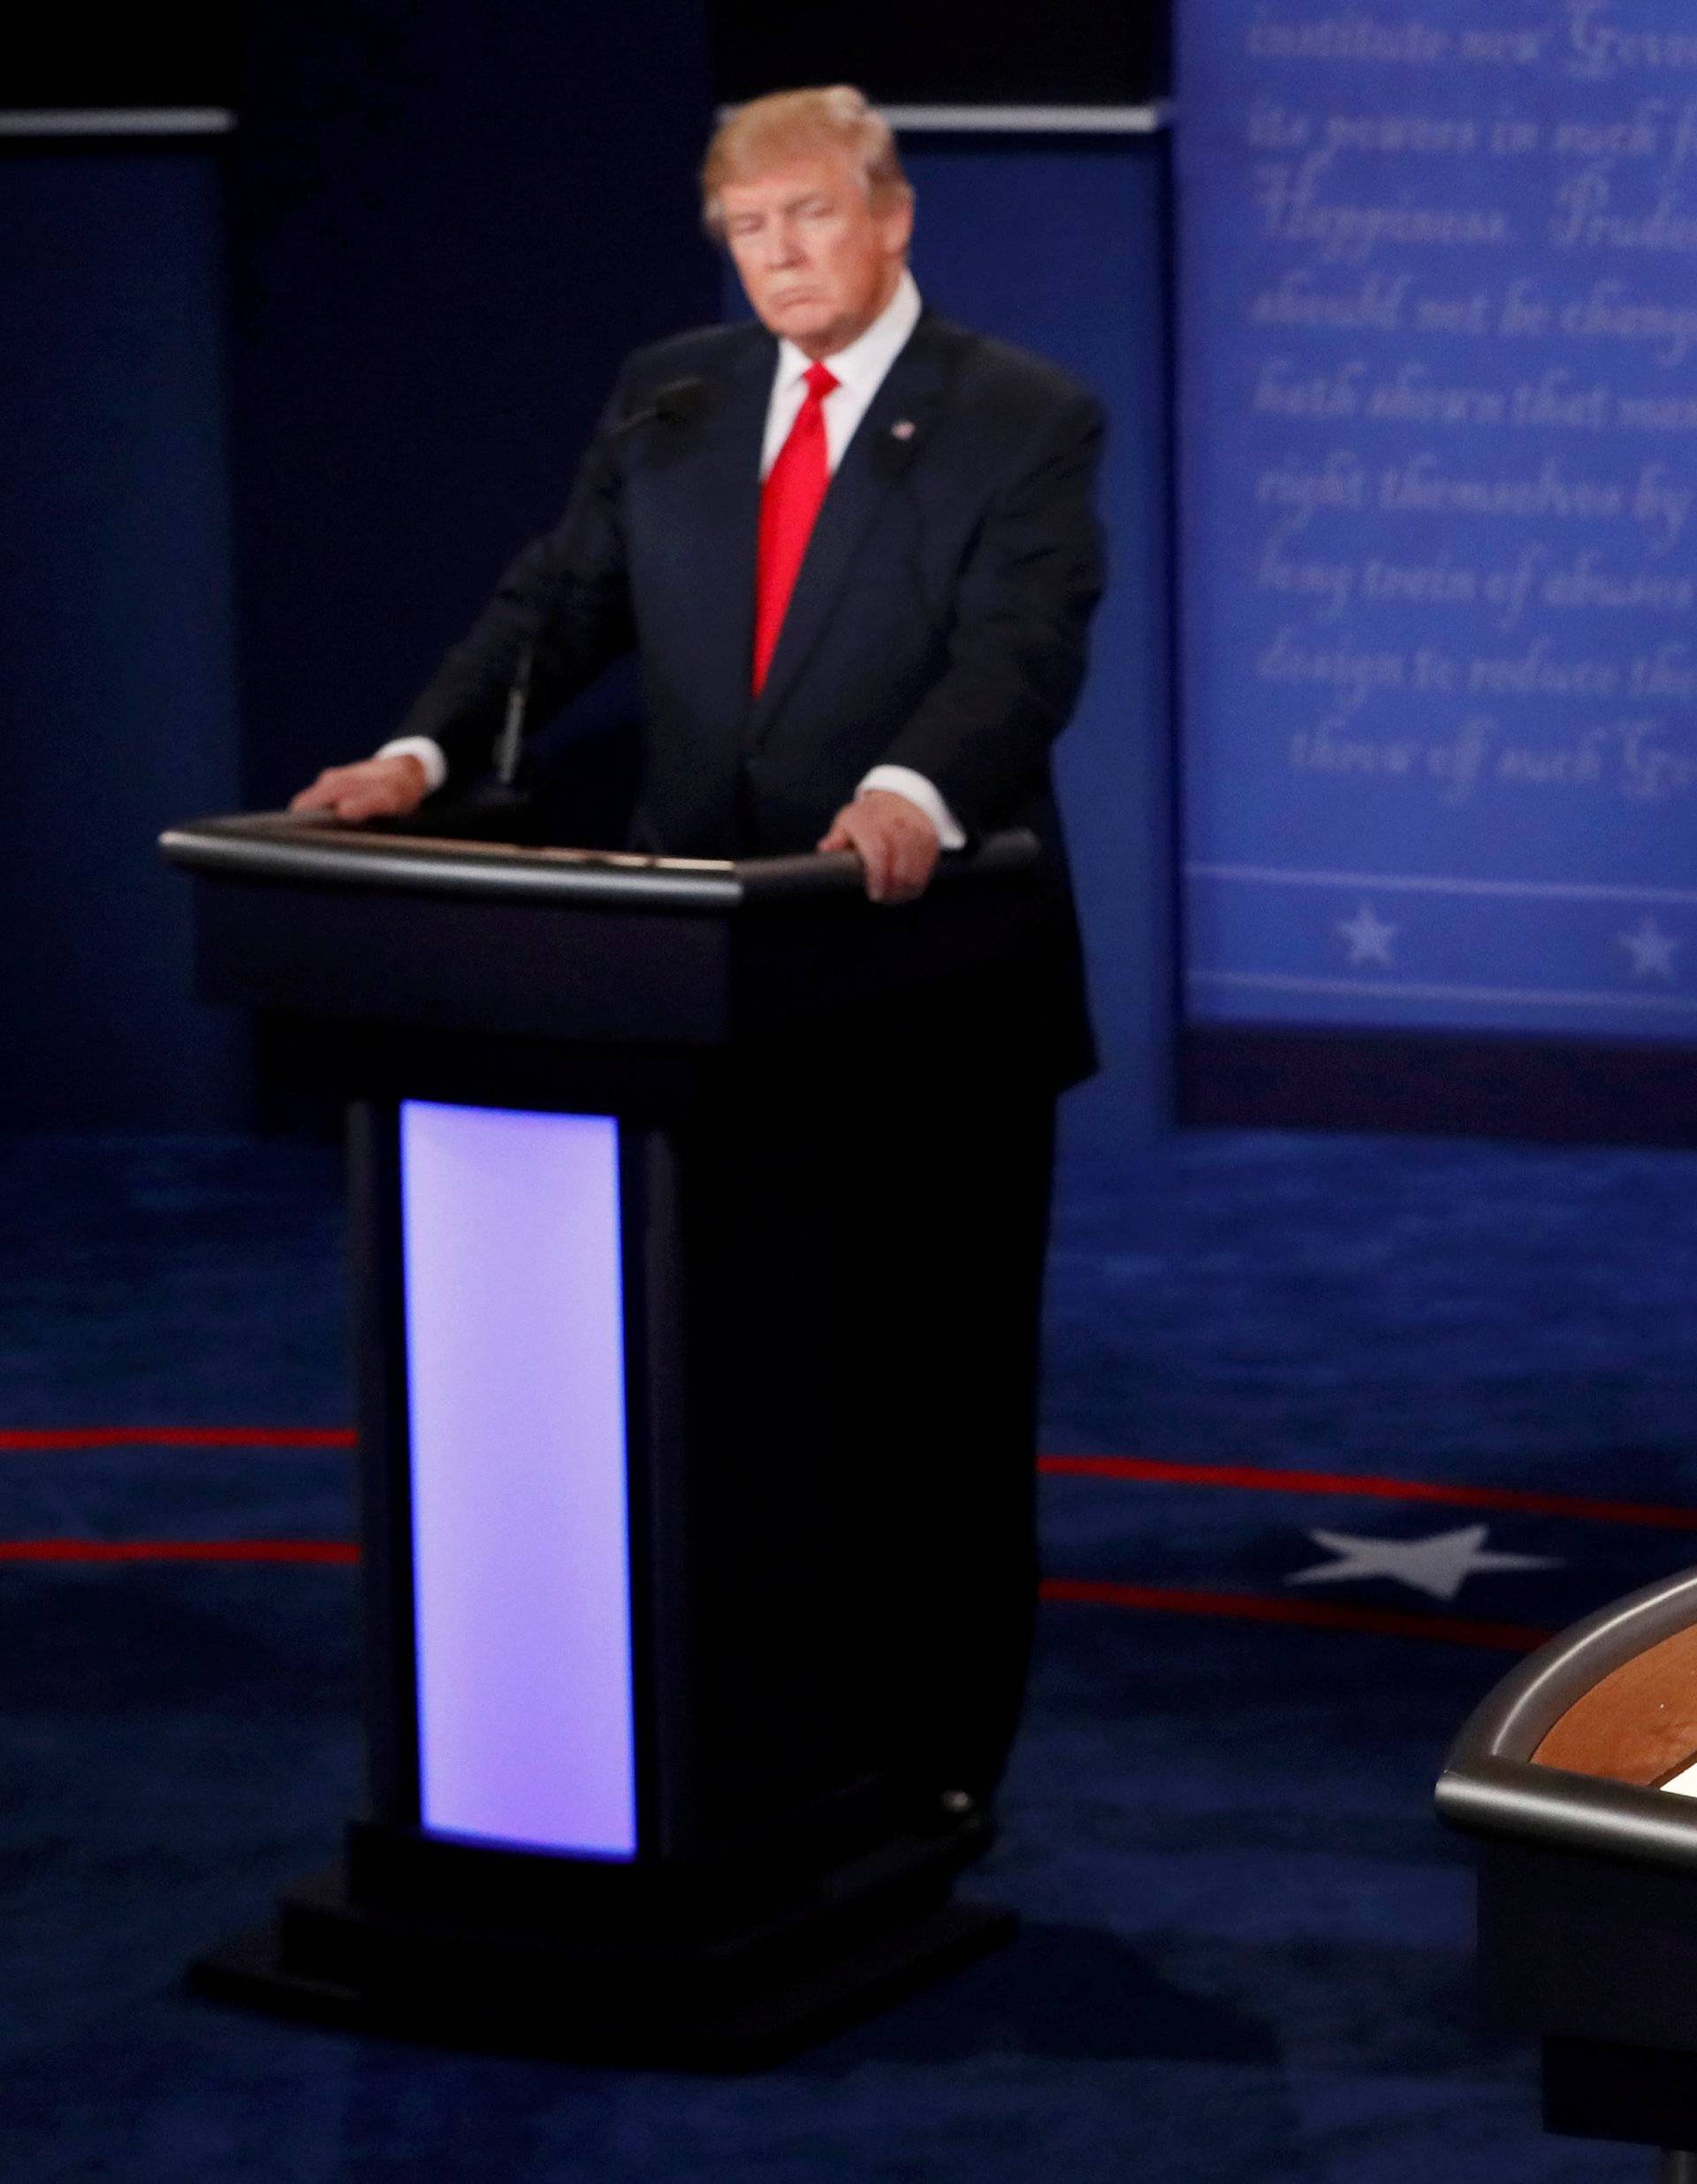 Trump listens as Clinton speaks during their third and final 2016 presidential campaign debate at UNLV in Las Vegas